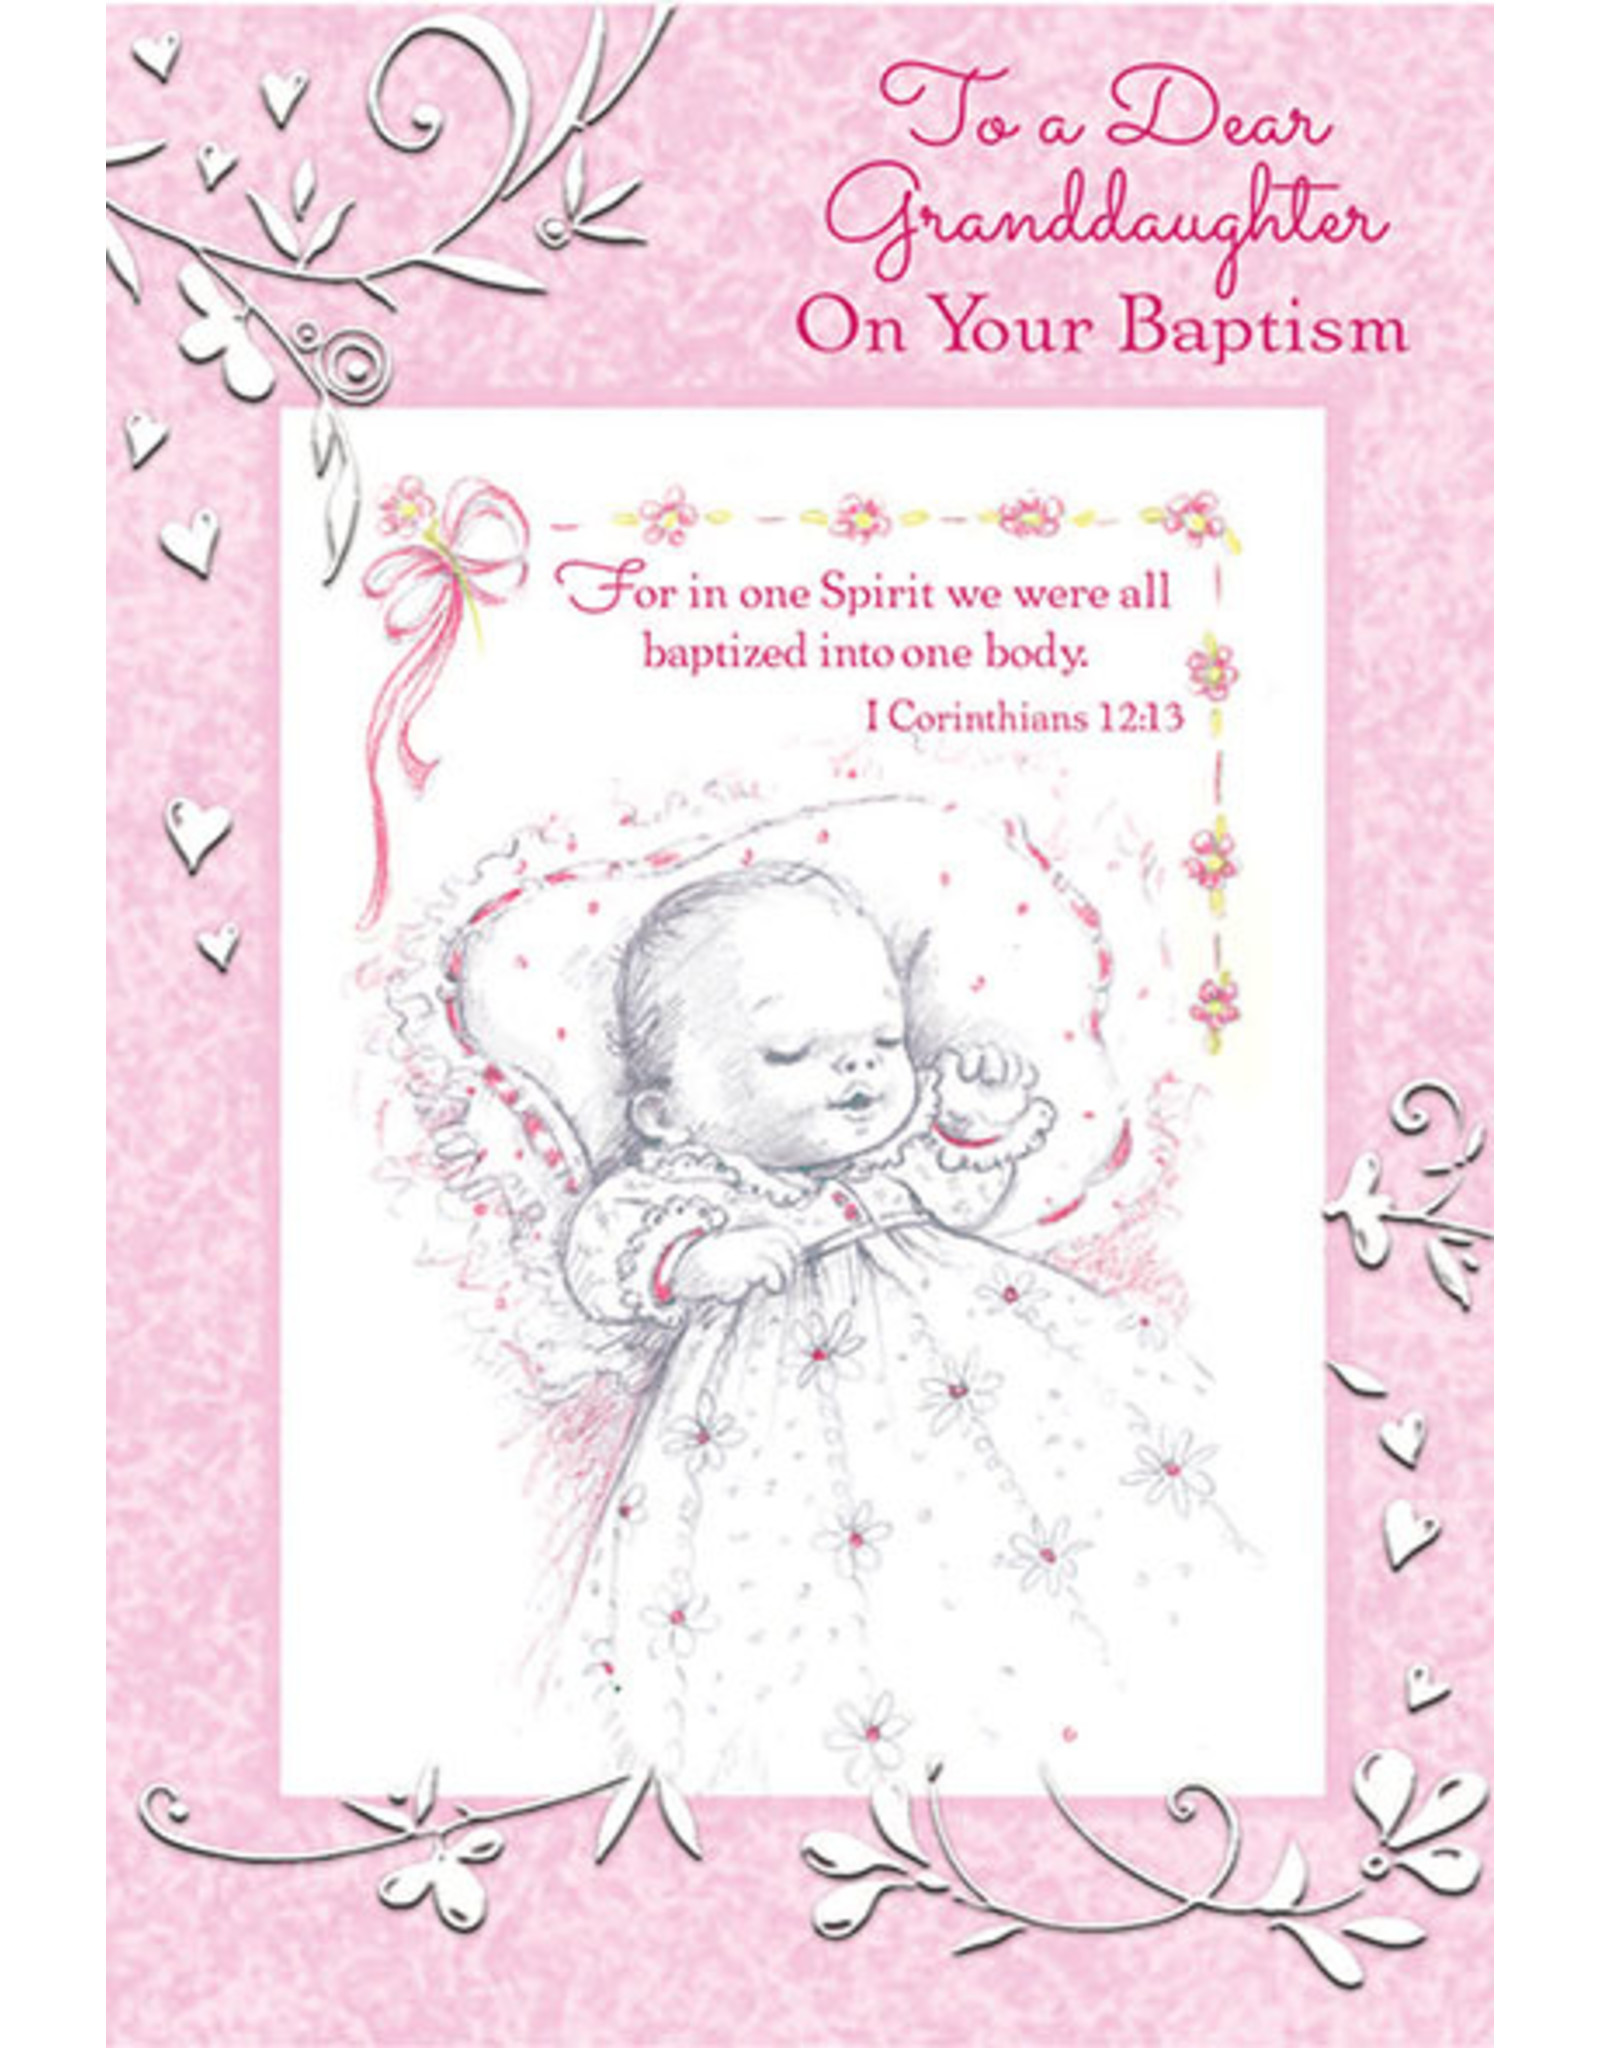 Greetings of Faith Card - Baptism Granddaughter, Pink Detailing